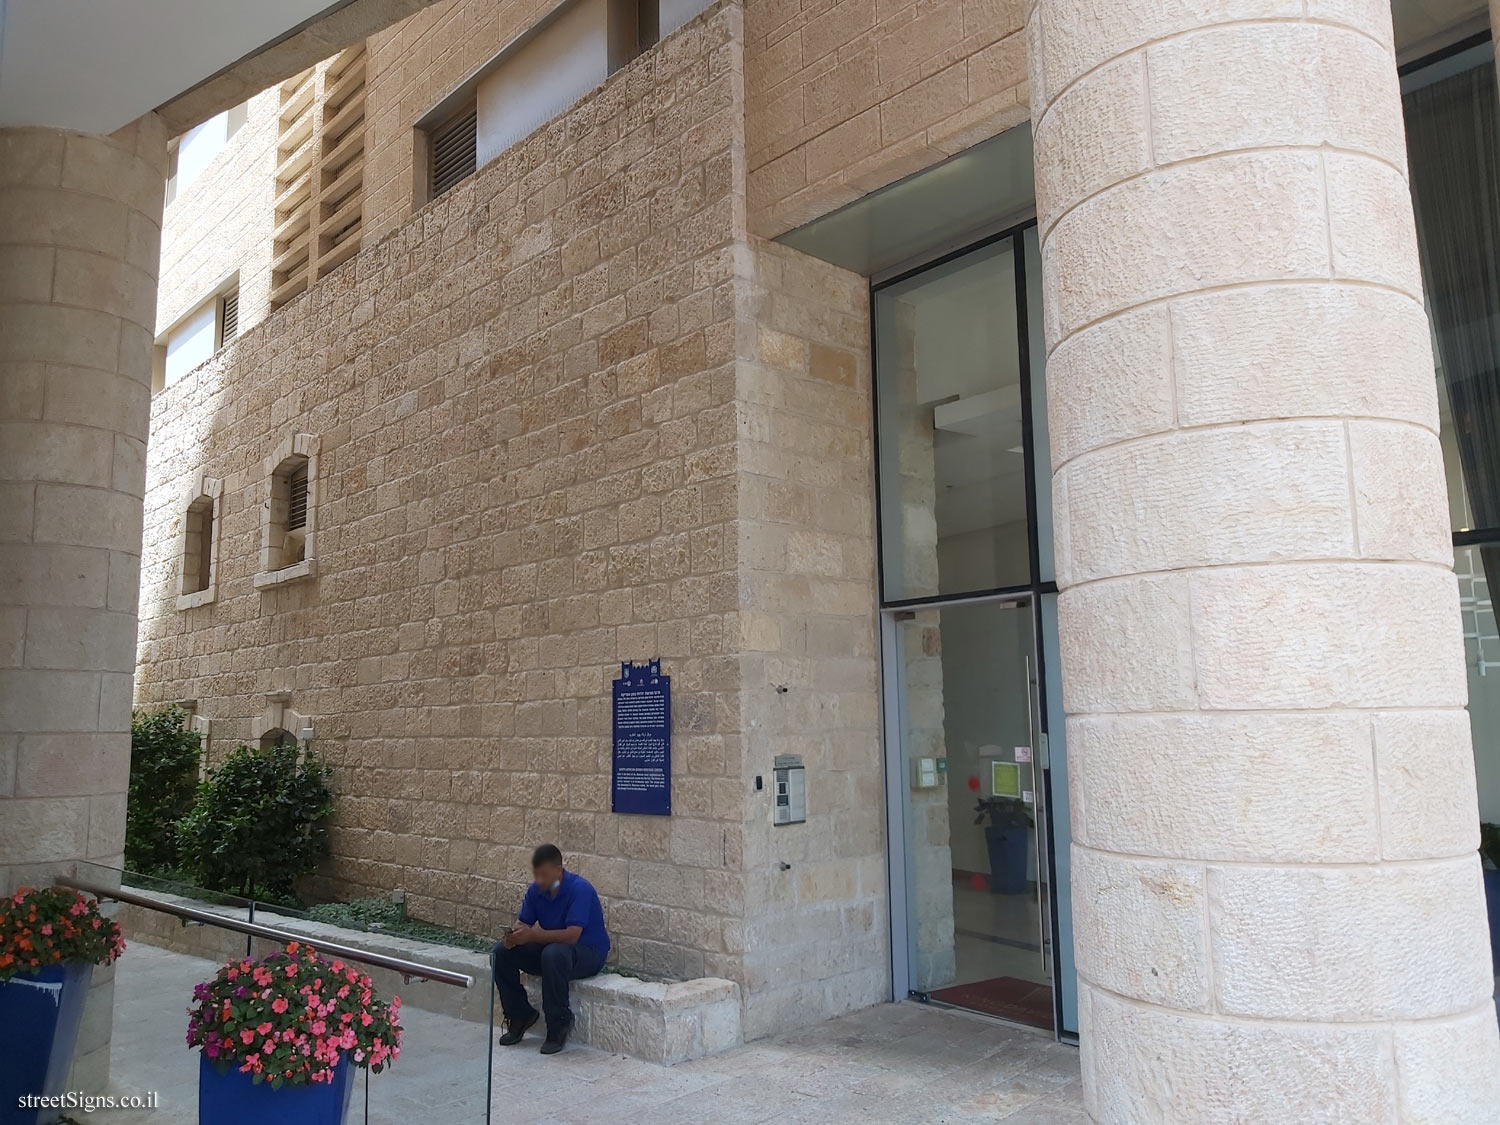 Jerusalem - Heritage Sites in Israel - North African Jewish Heritage Center - Ha-Ma’aravim St 13, Jerusalem, Israel